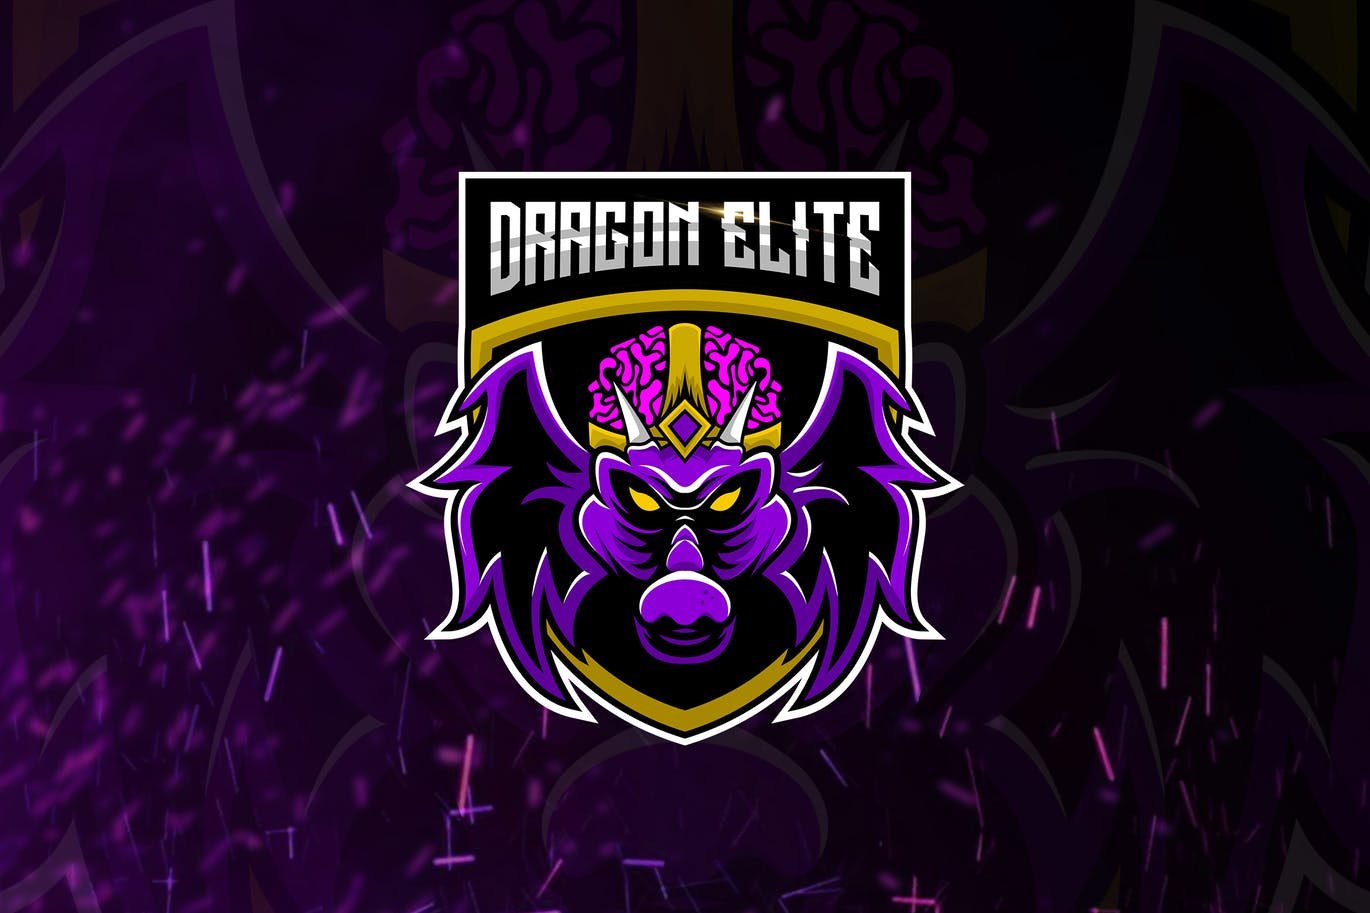 Dragon Elite - Mascot & Esport Logo cover image.